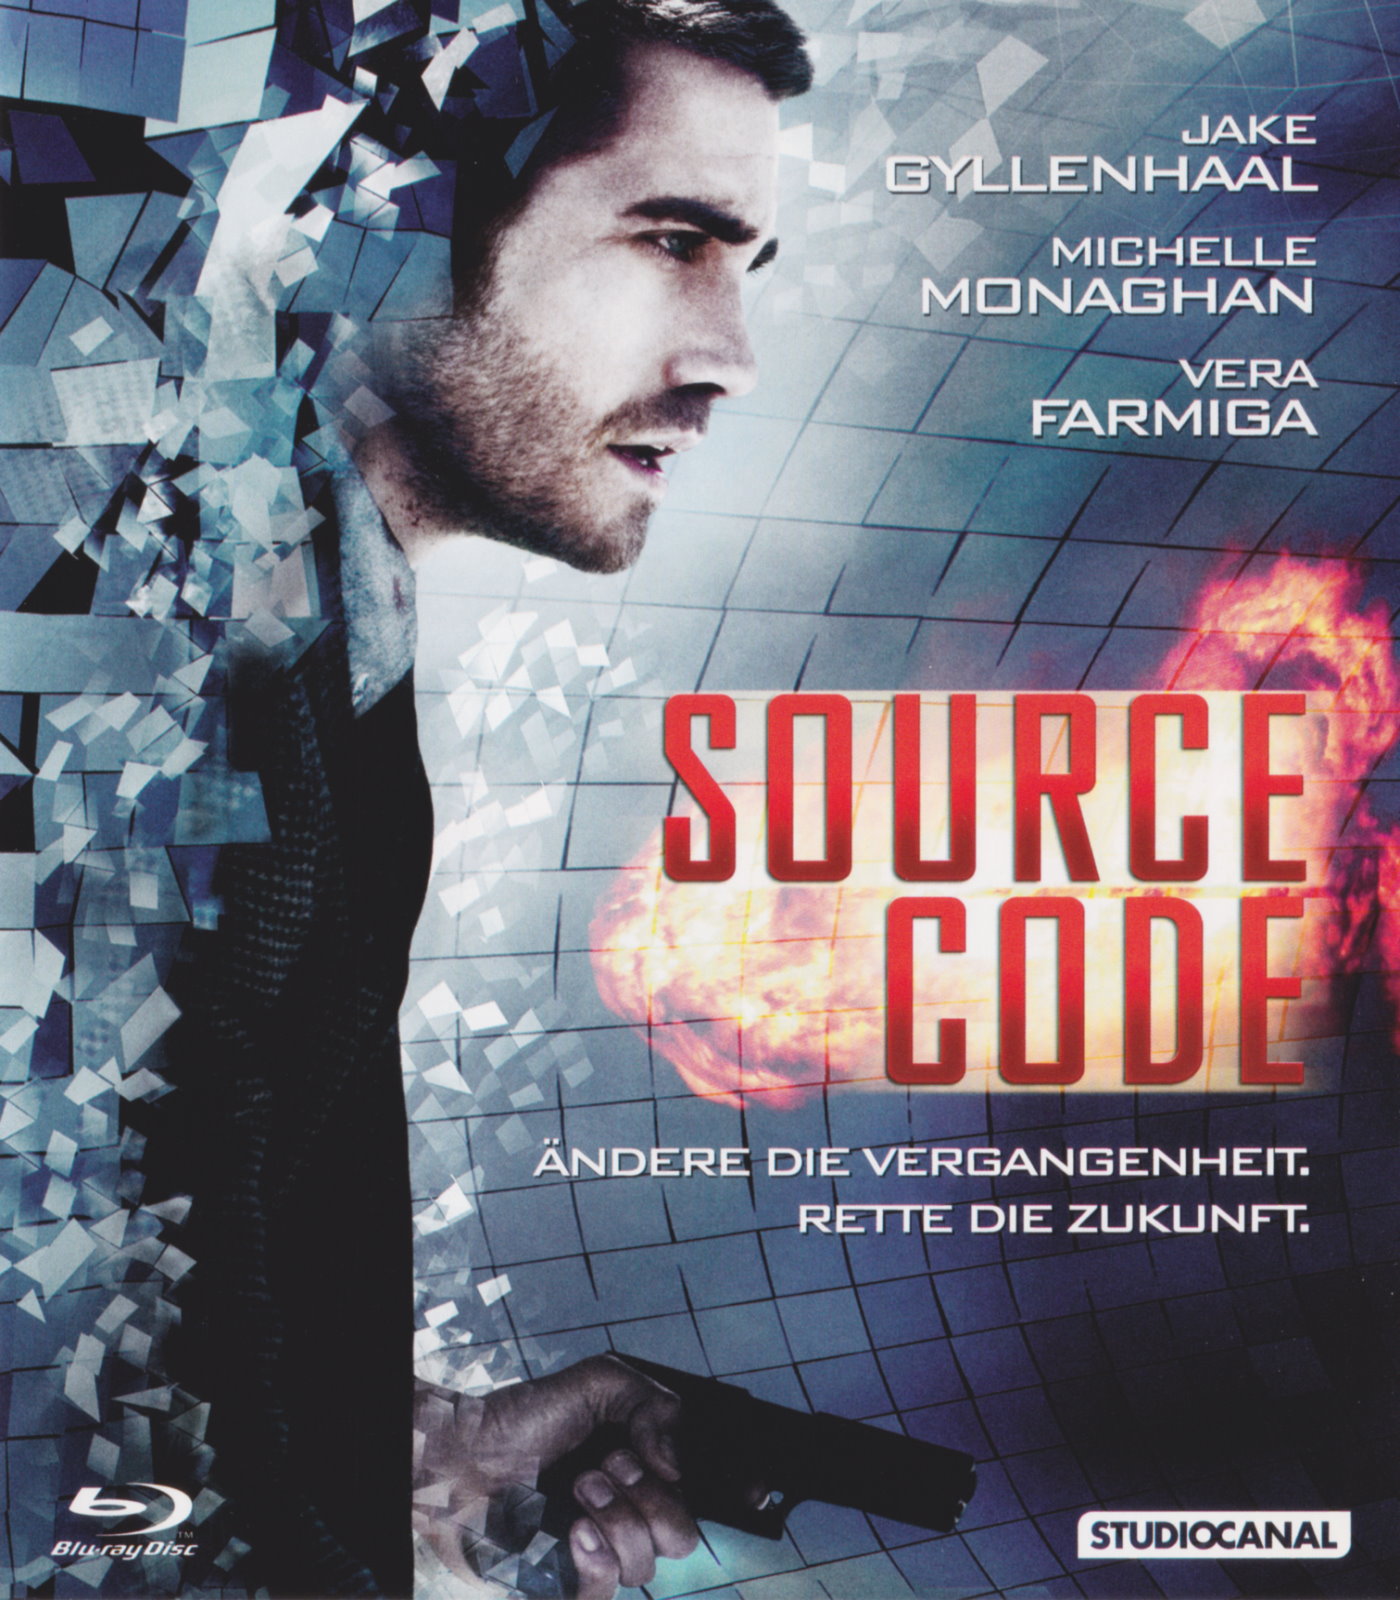 Cover - Source Code.jpg